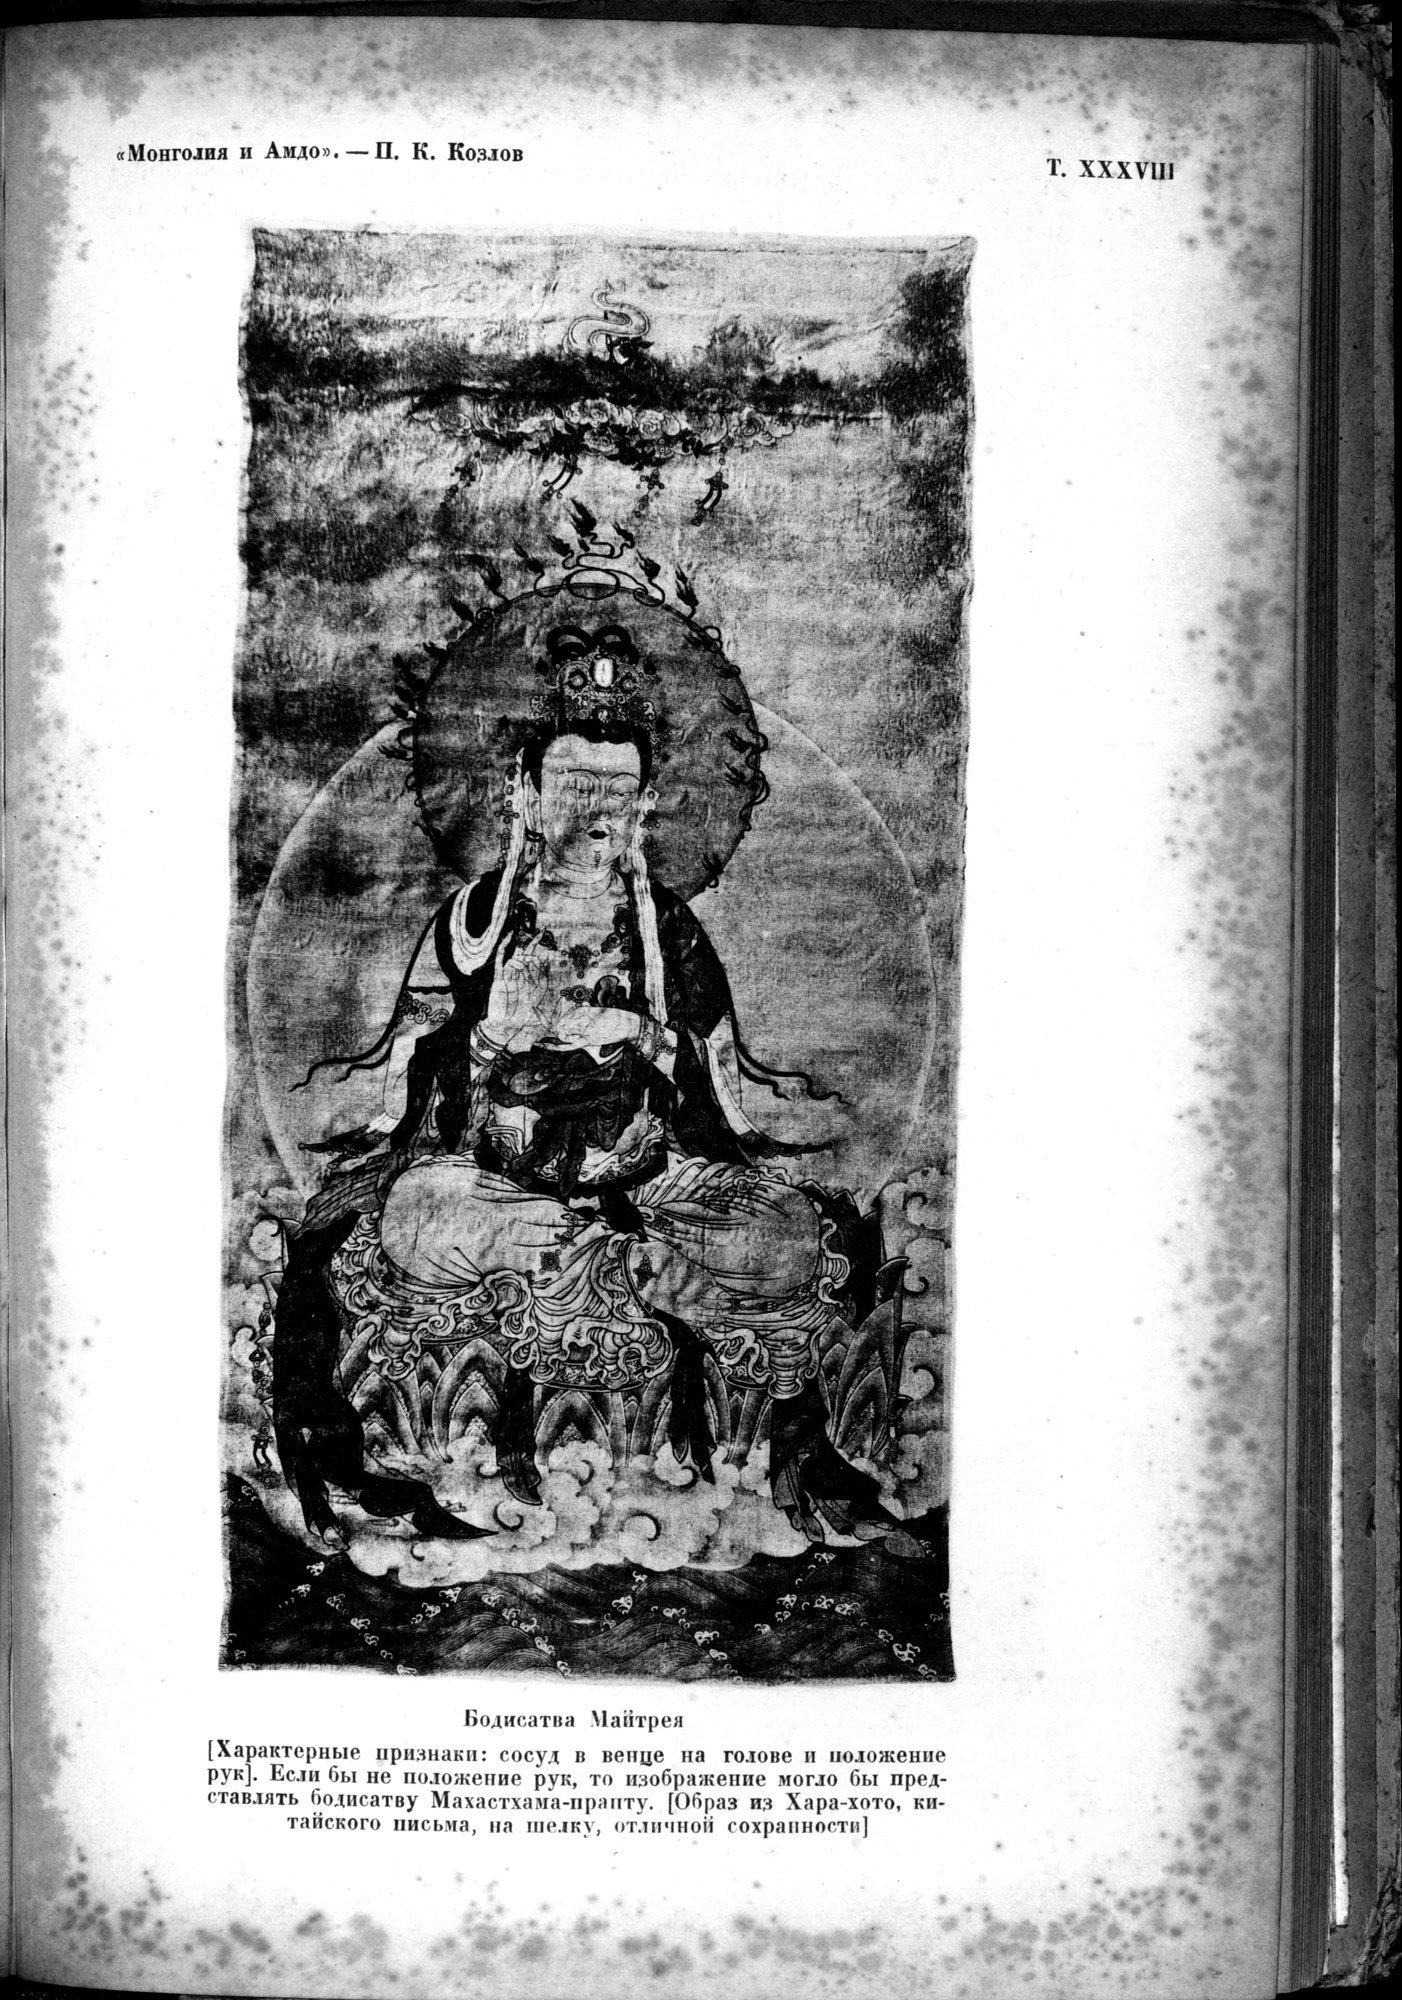 Mongoliya i Amdo i mertby gorod Khara-Khoto : vol.1 / Page 693 (Grayscale High Resolution Image)